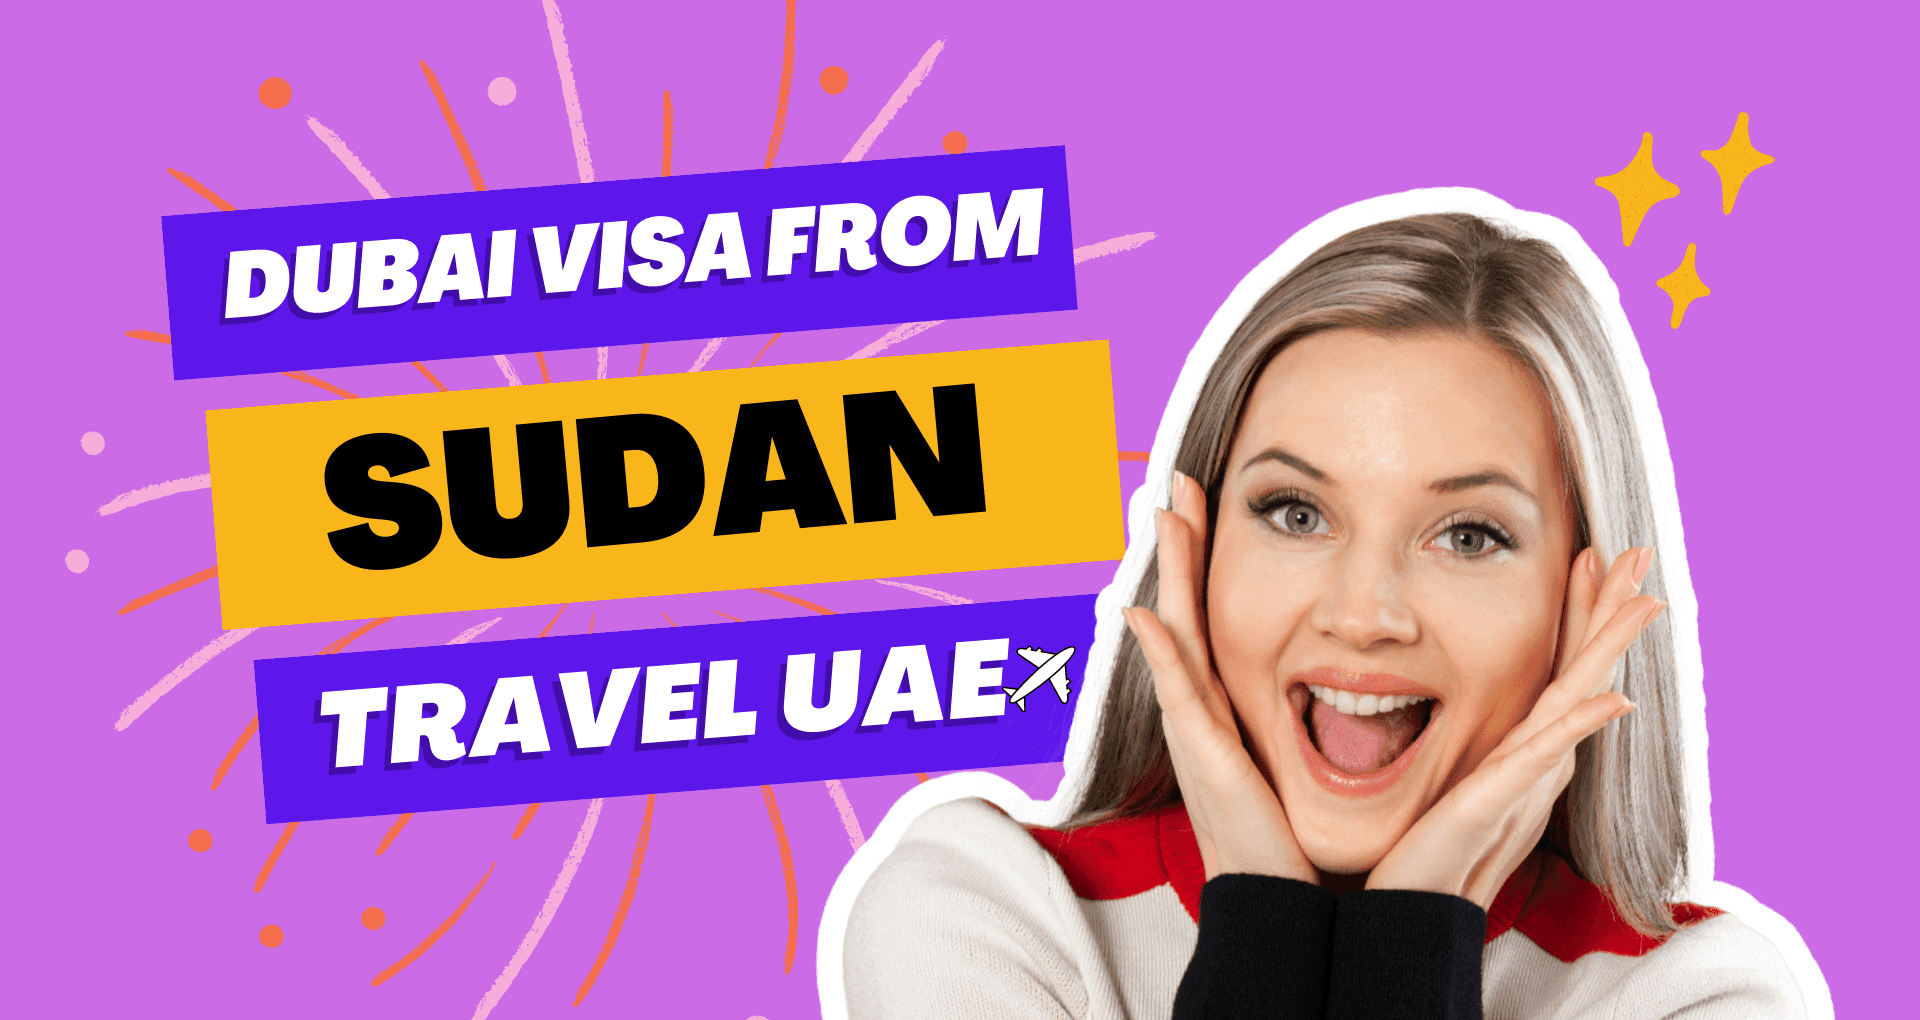 Dubai visa from Sudan